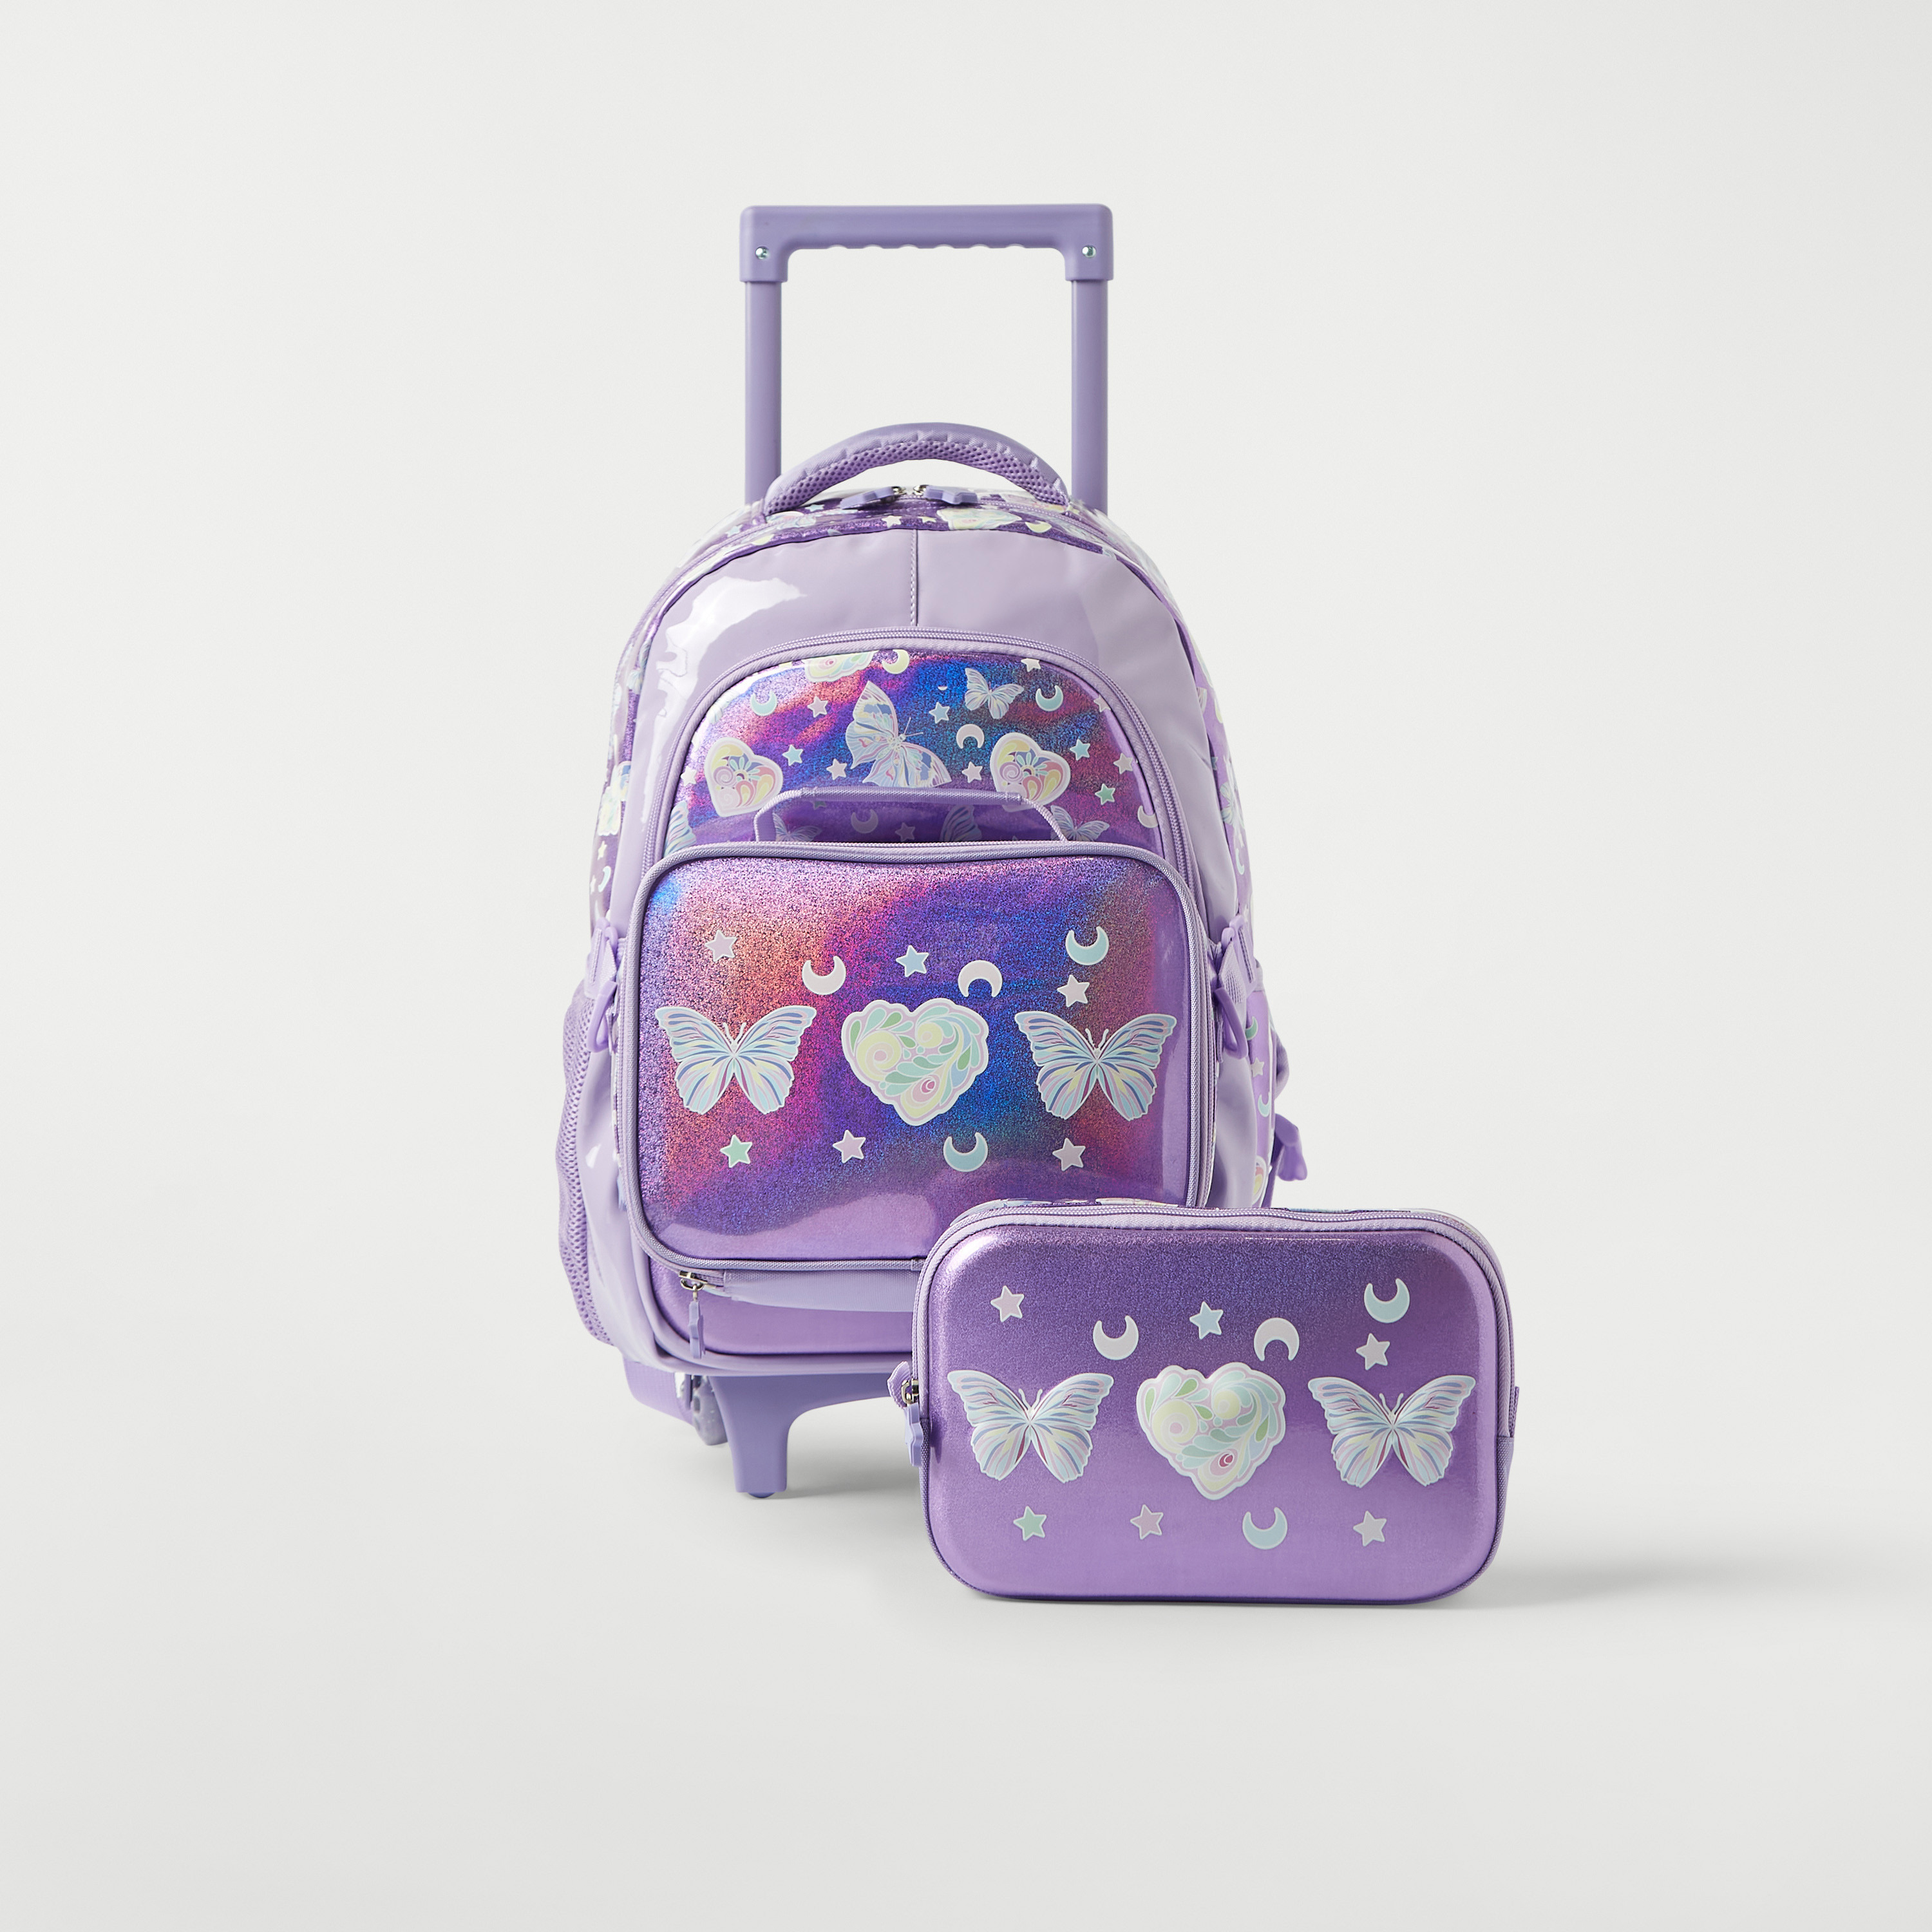 Princess kids trolley school bags for girls - Xiamen Fulllook Co., Limited